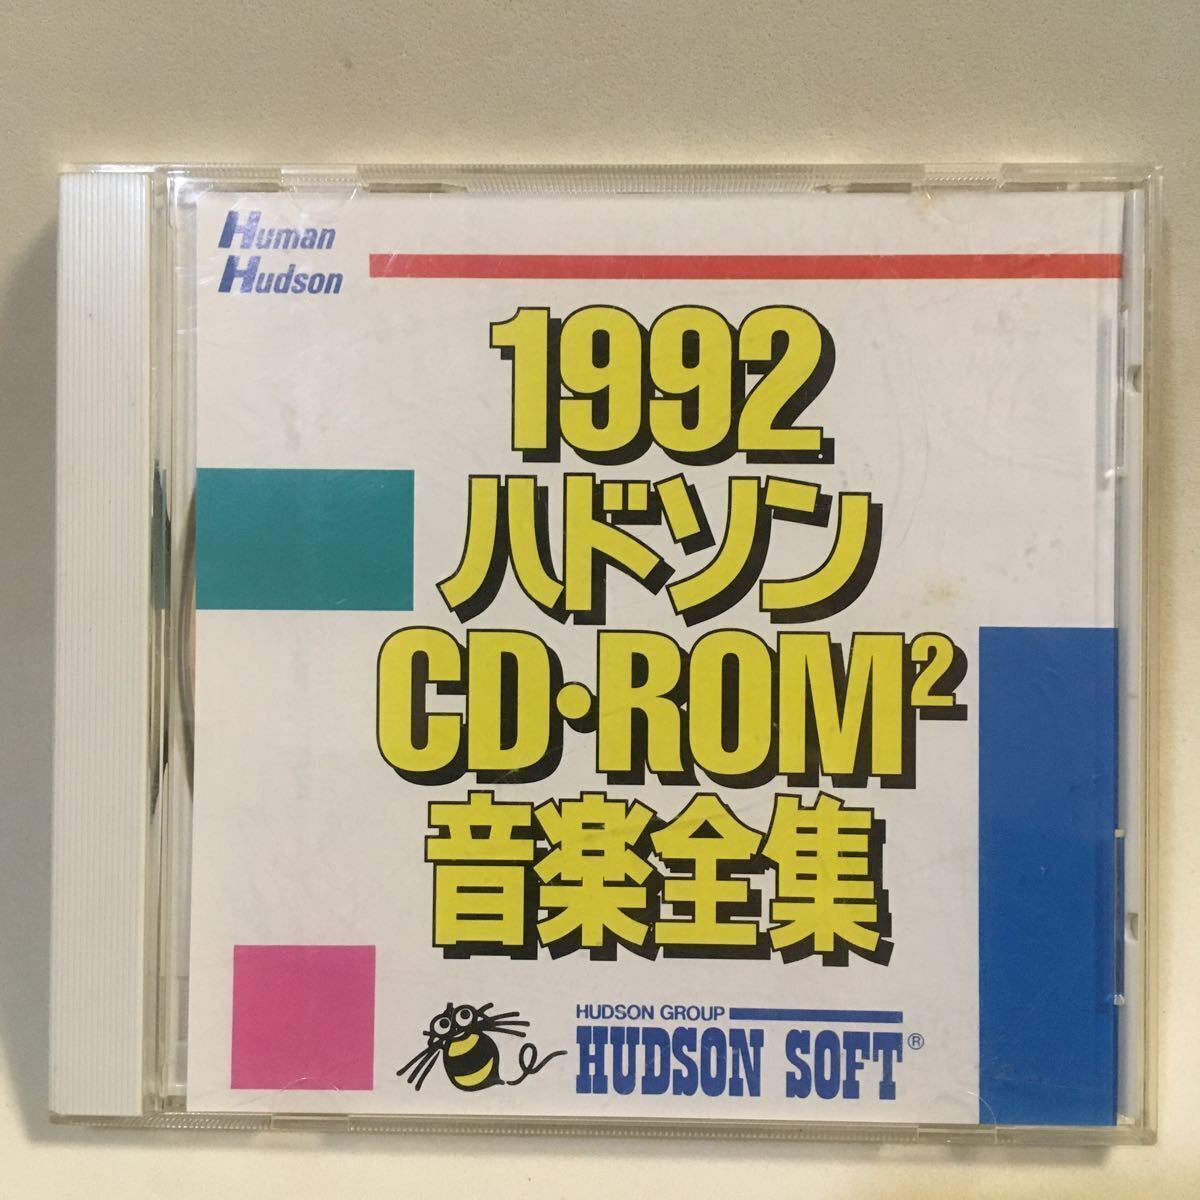 1992 Hudson Cd-Rom2 Music Complete Works Novelty Dragon Slayer Legend Of Heroes 